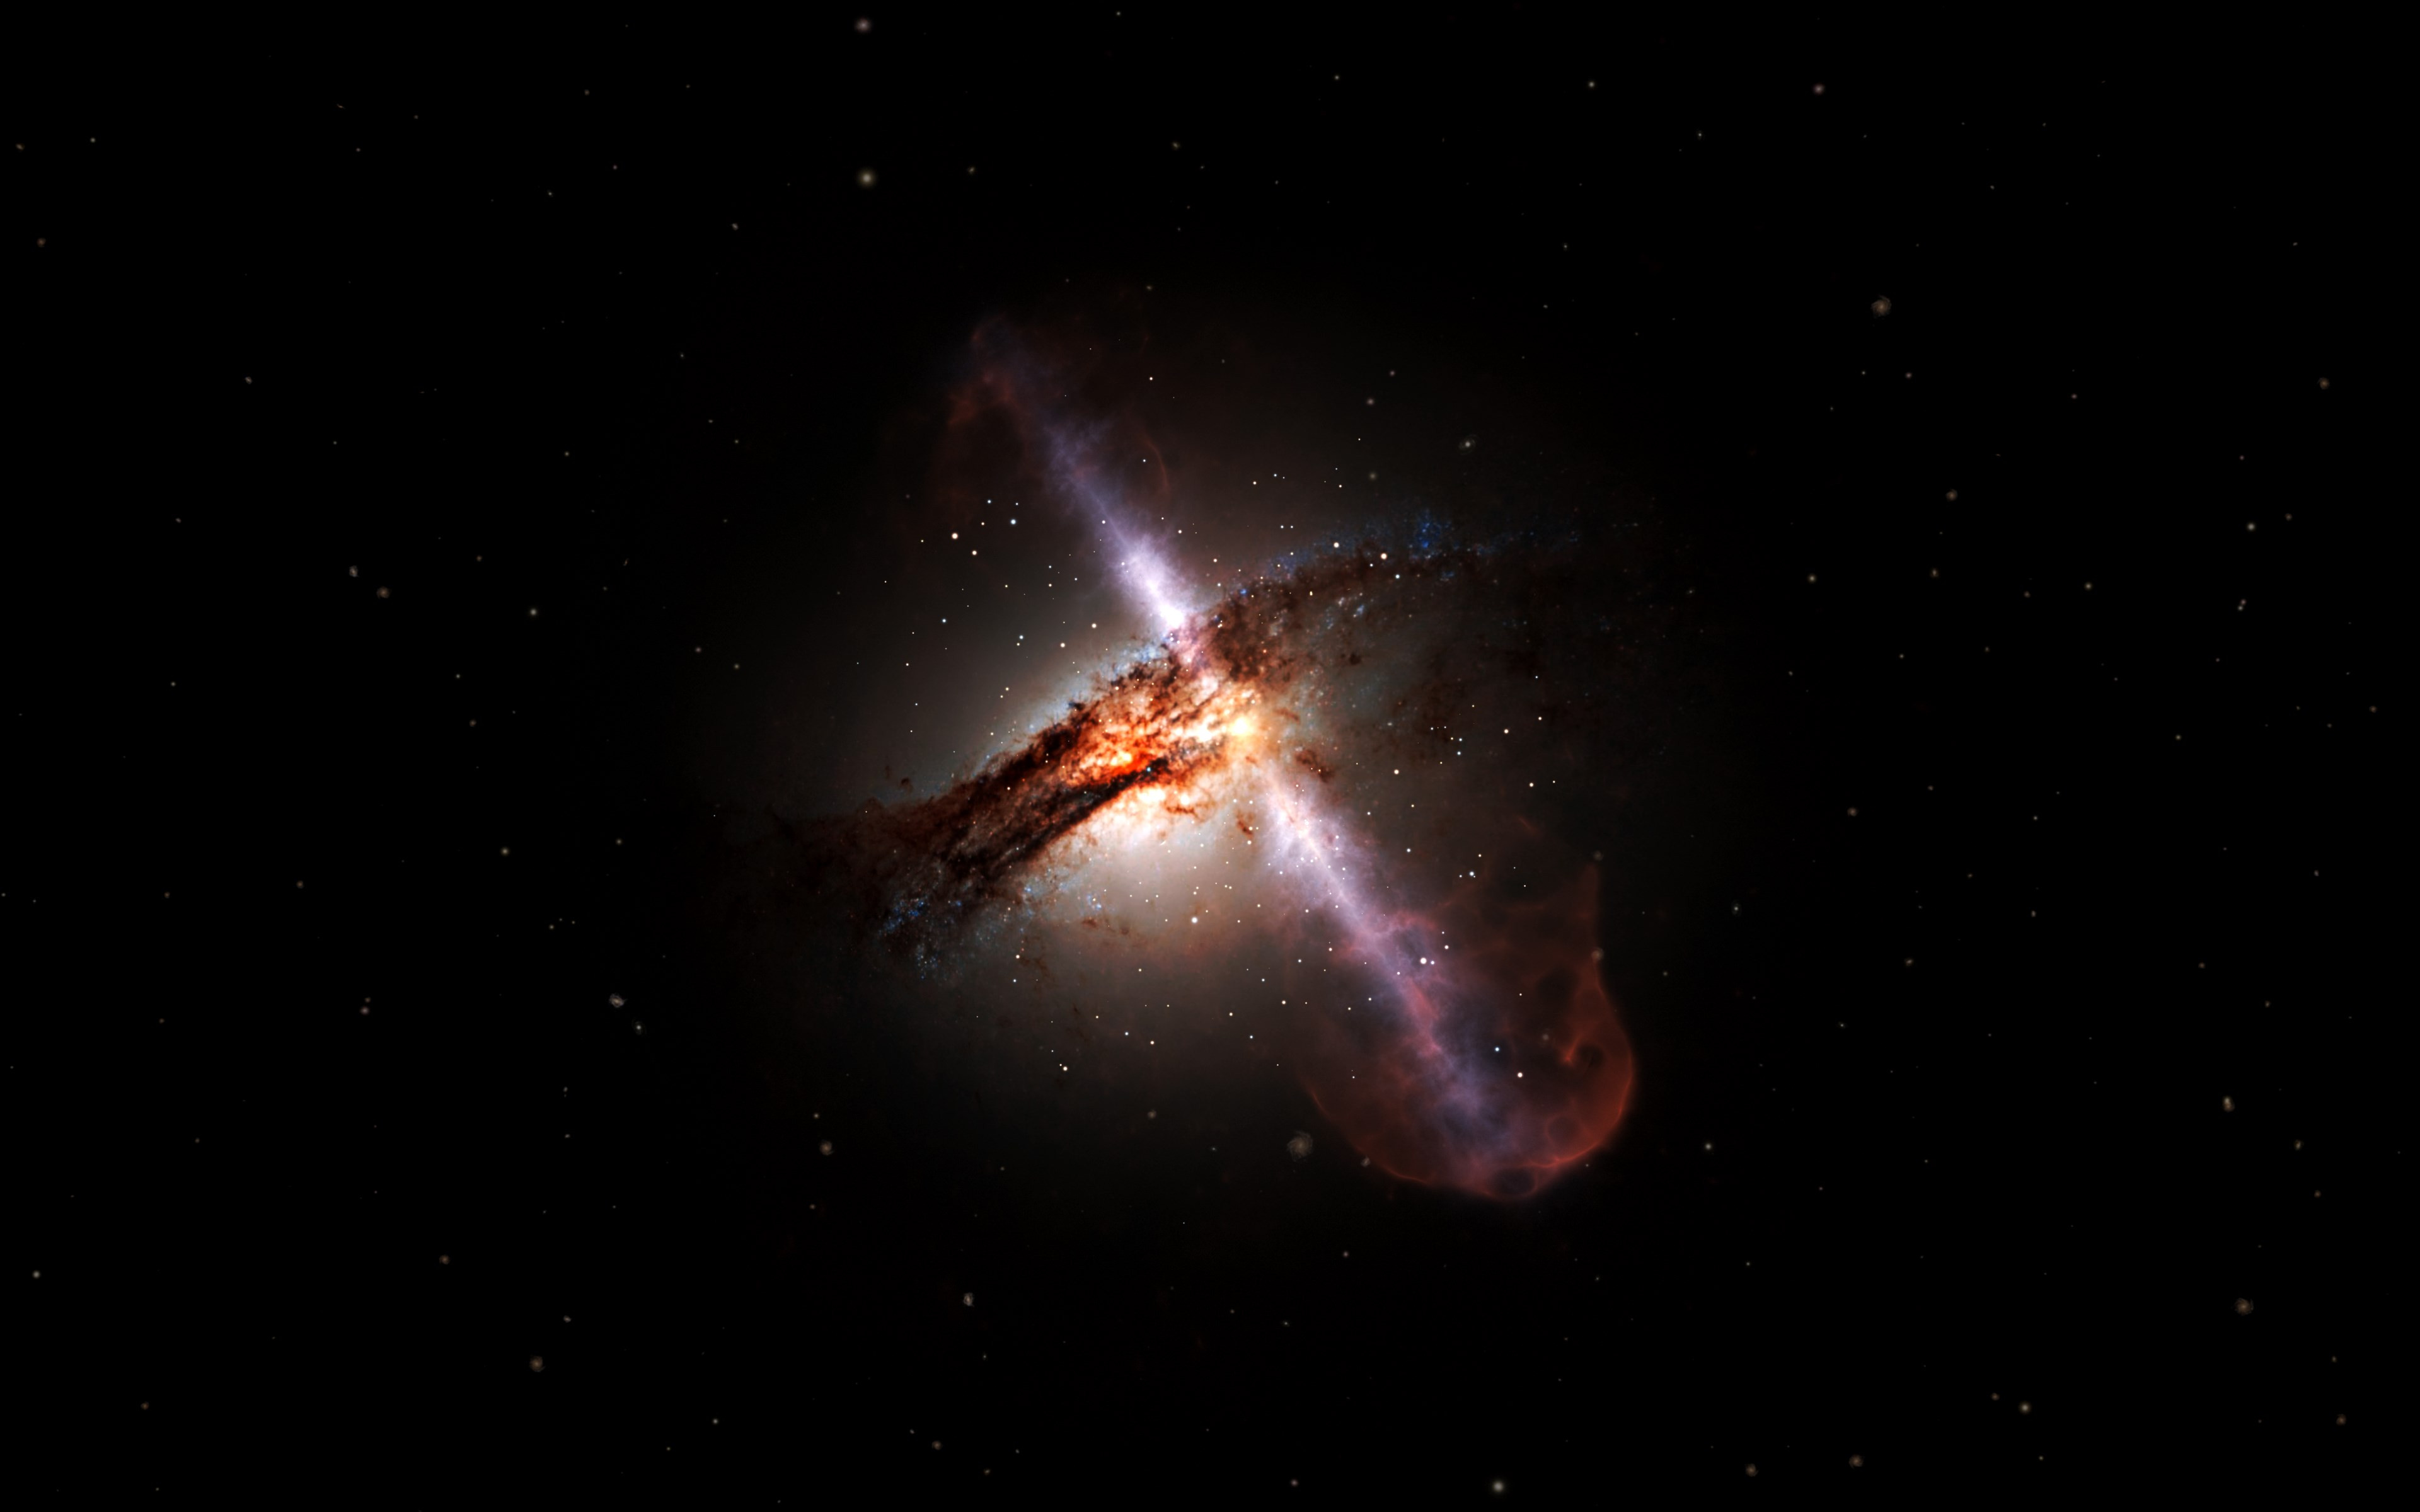 Supermassive black hole wallpaper 3840x2400